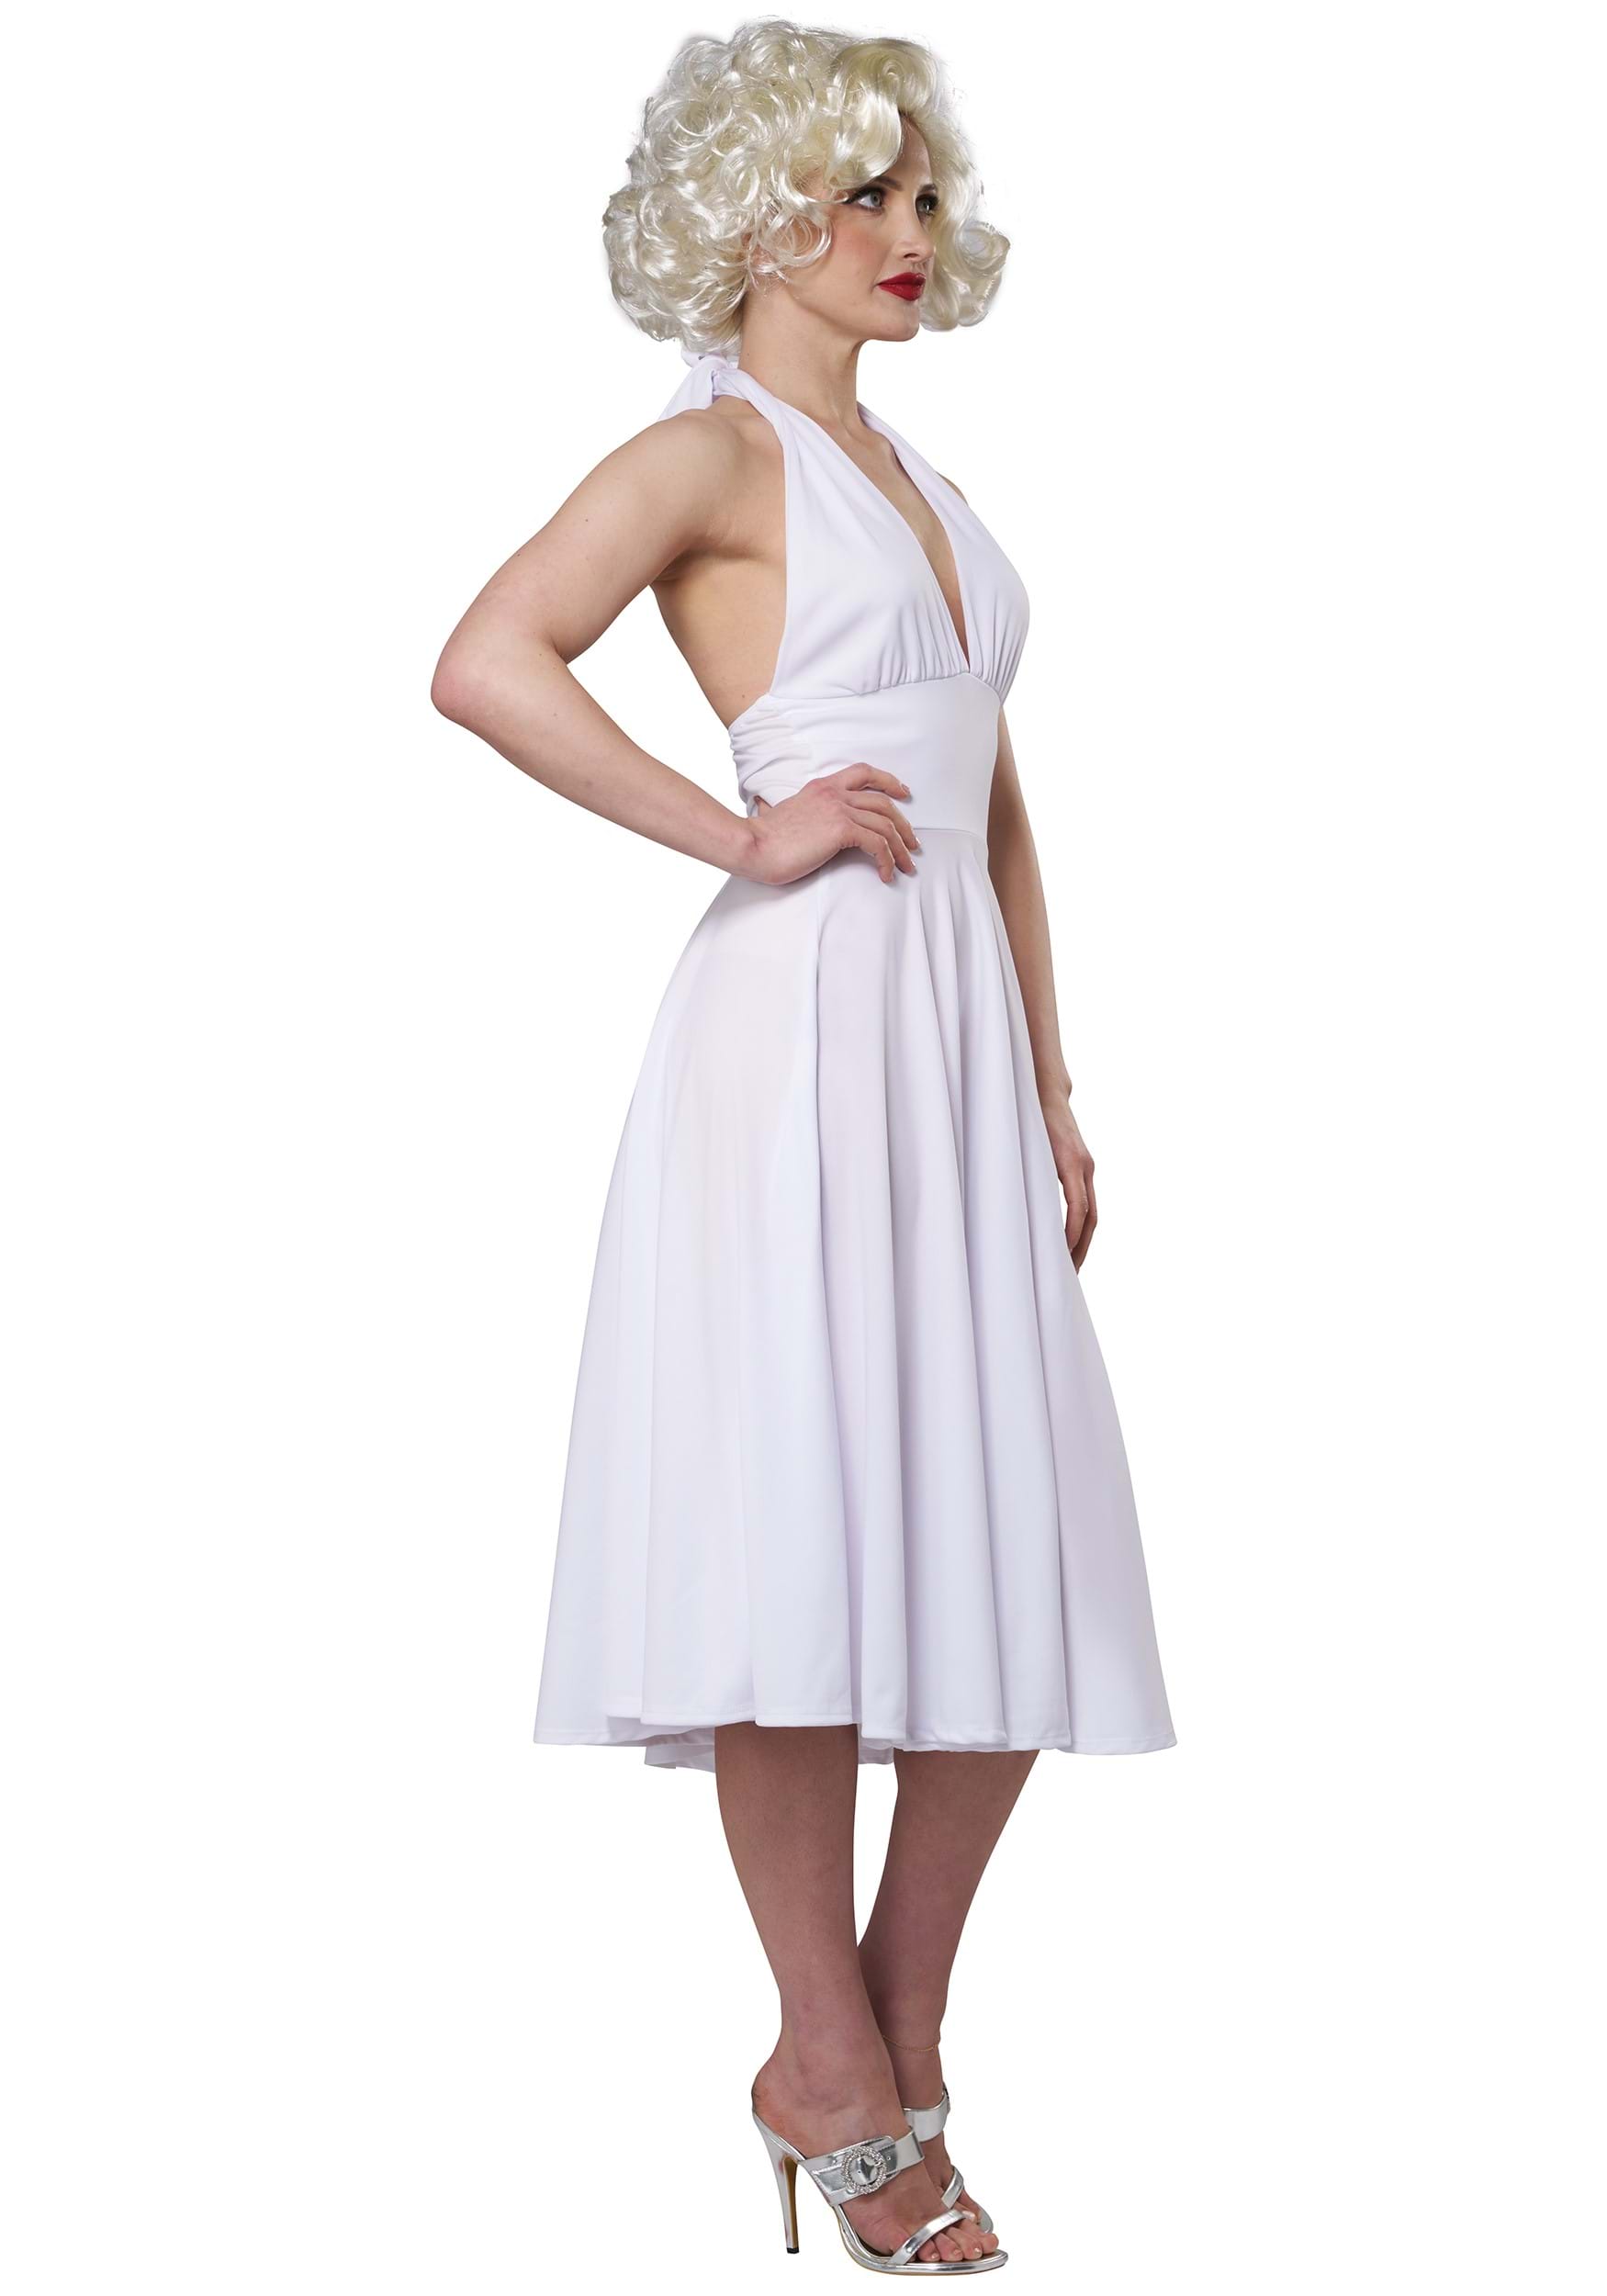 Marilyn Monroe Dress Costume , Sexy White Costume Dress